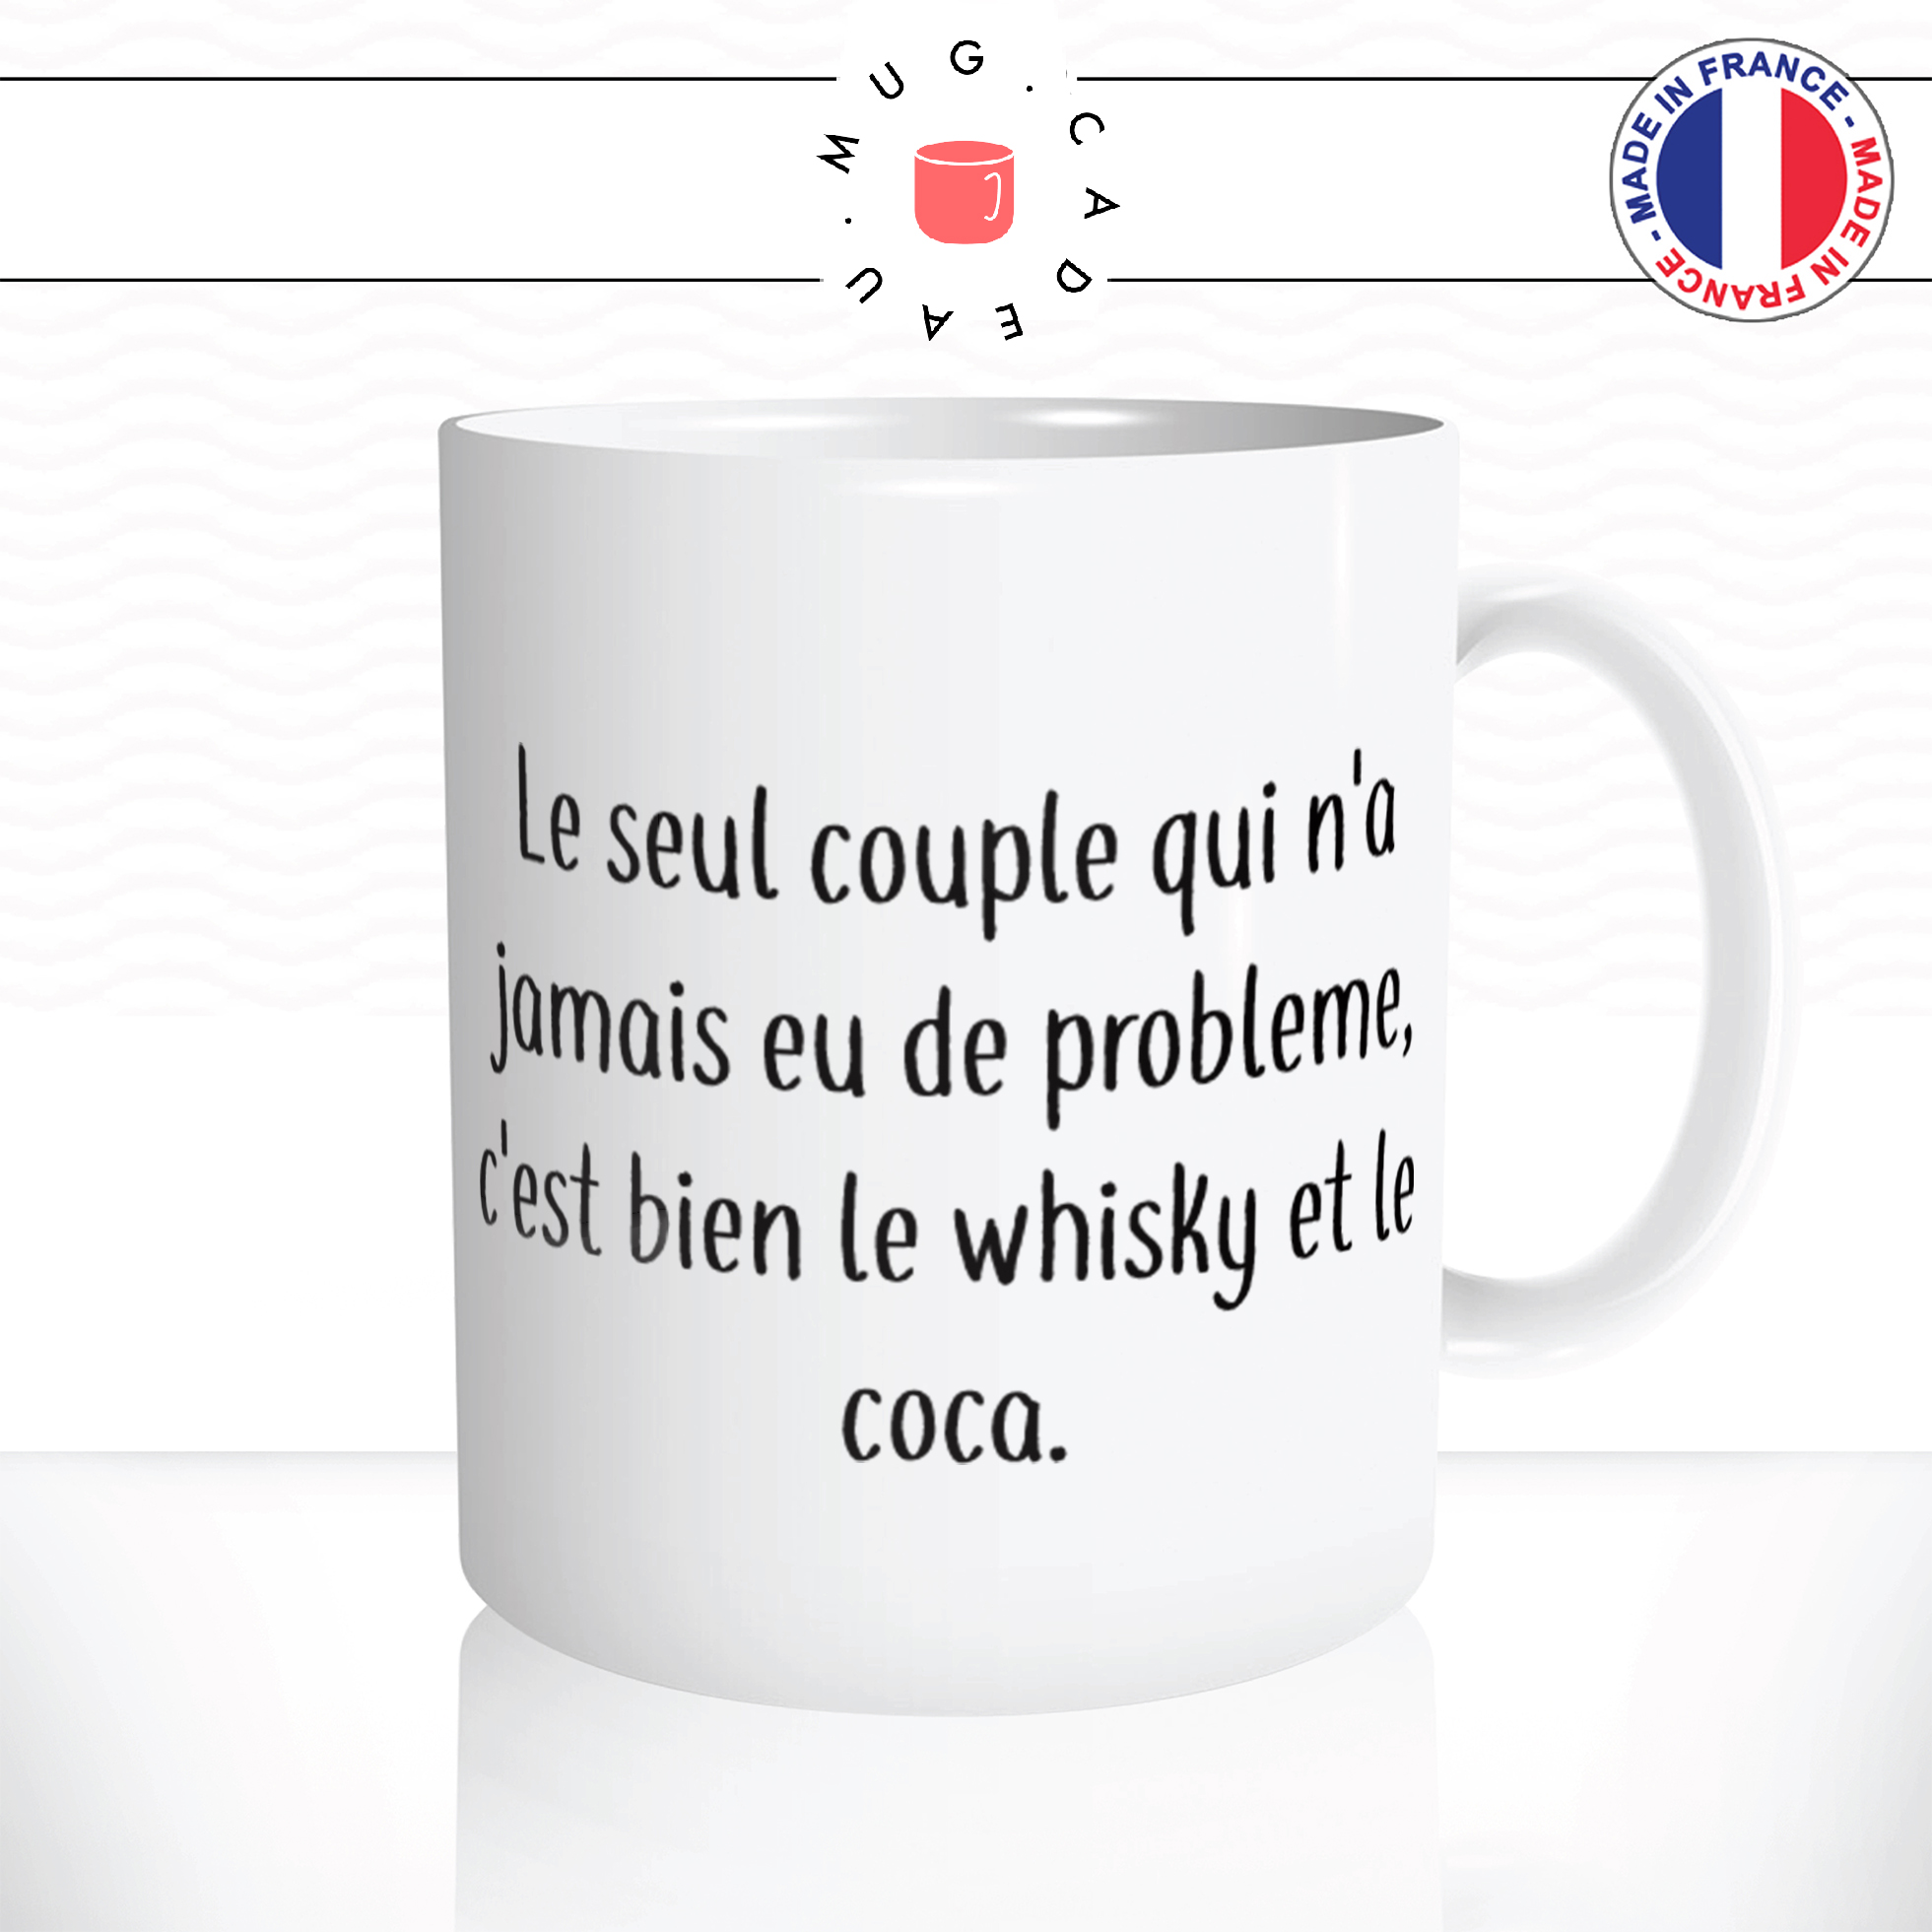 mug-tasse-ref14-citation-amour-couple-whisky-coca-no-problemes-cafe-the-mugs-tasses-personnalise-anse-droite